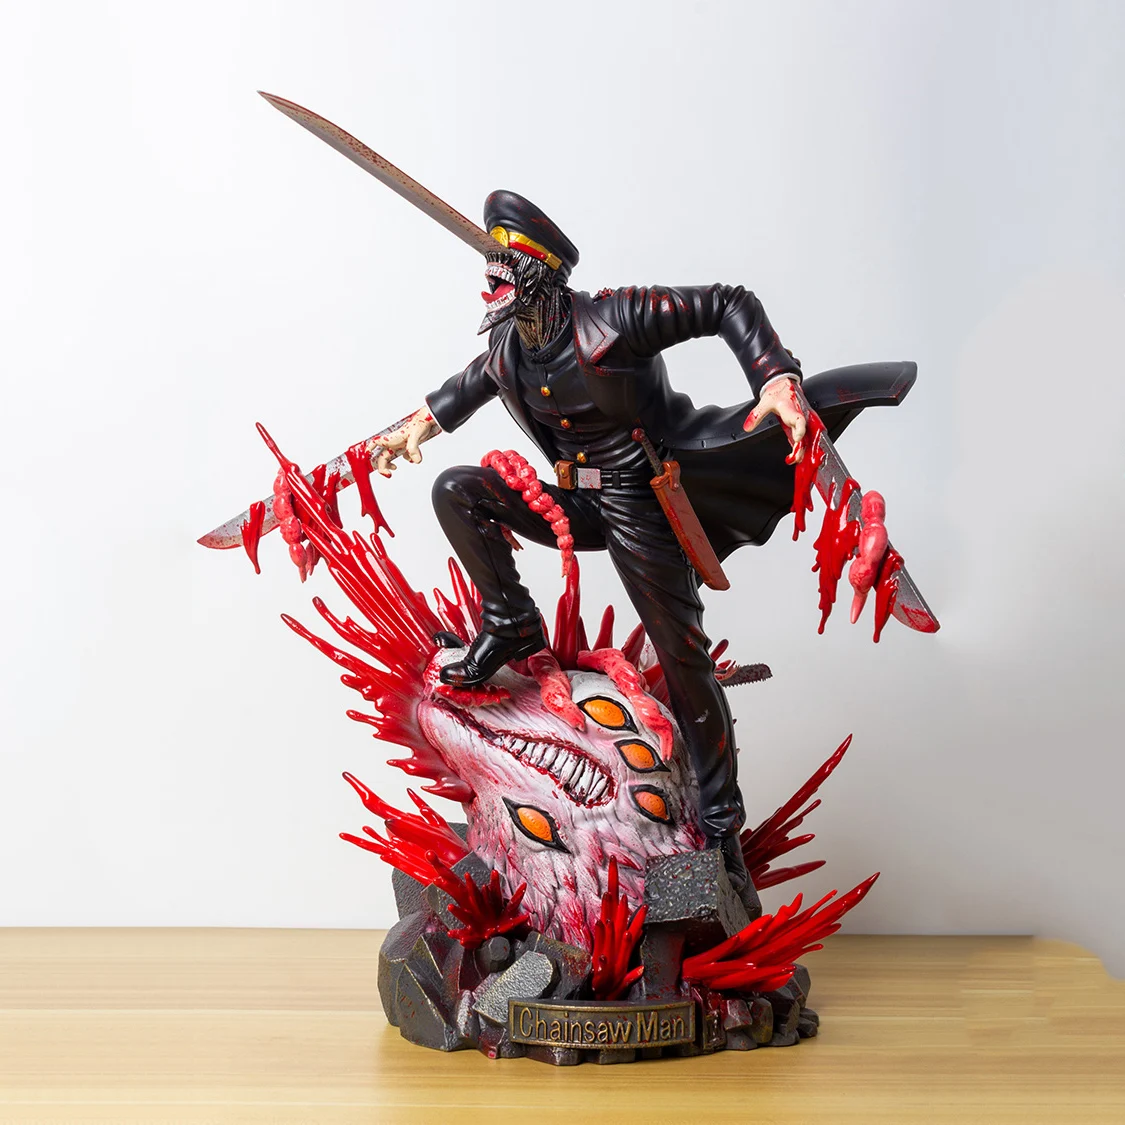 

35cm Chainsaw Man Katana Man VS Denji Anime Figure Samurai Sword Action Figure Makima Figurine Adult Collectible Model Doll Toys